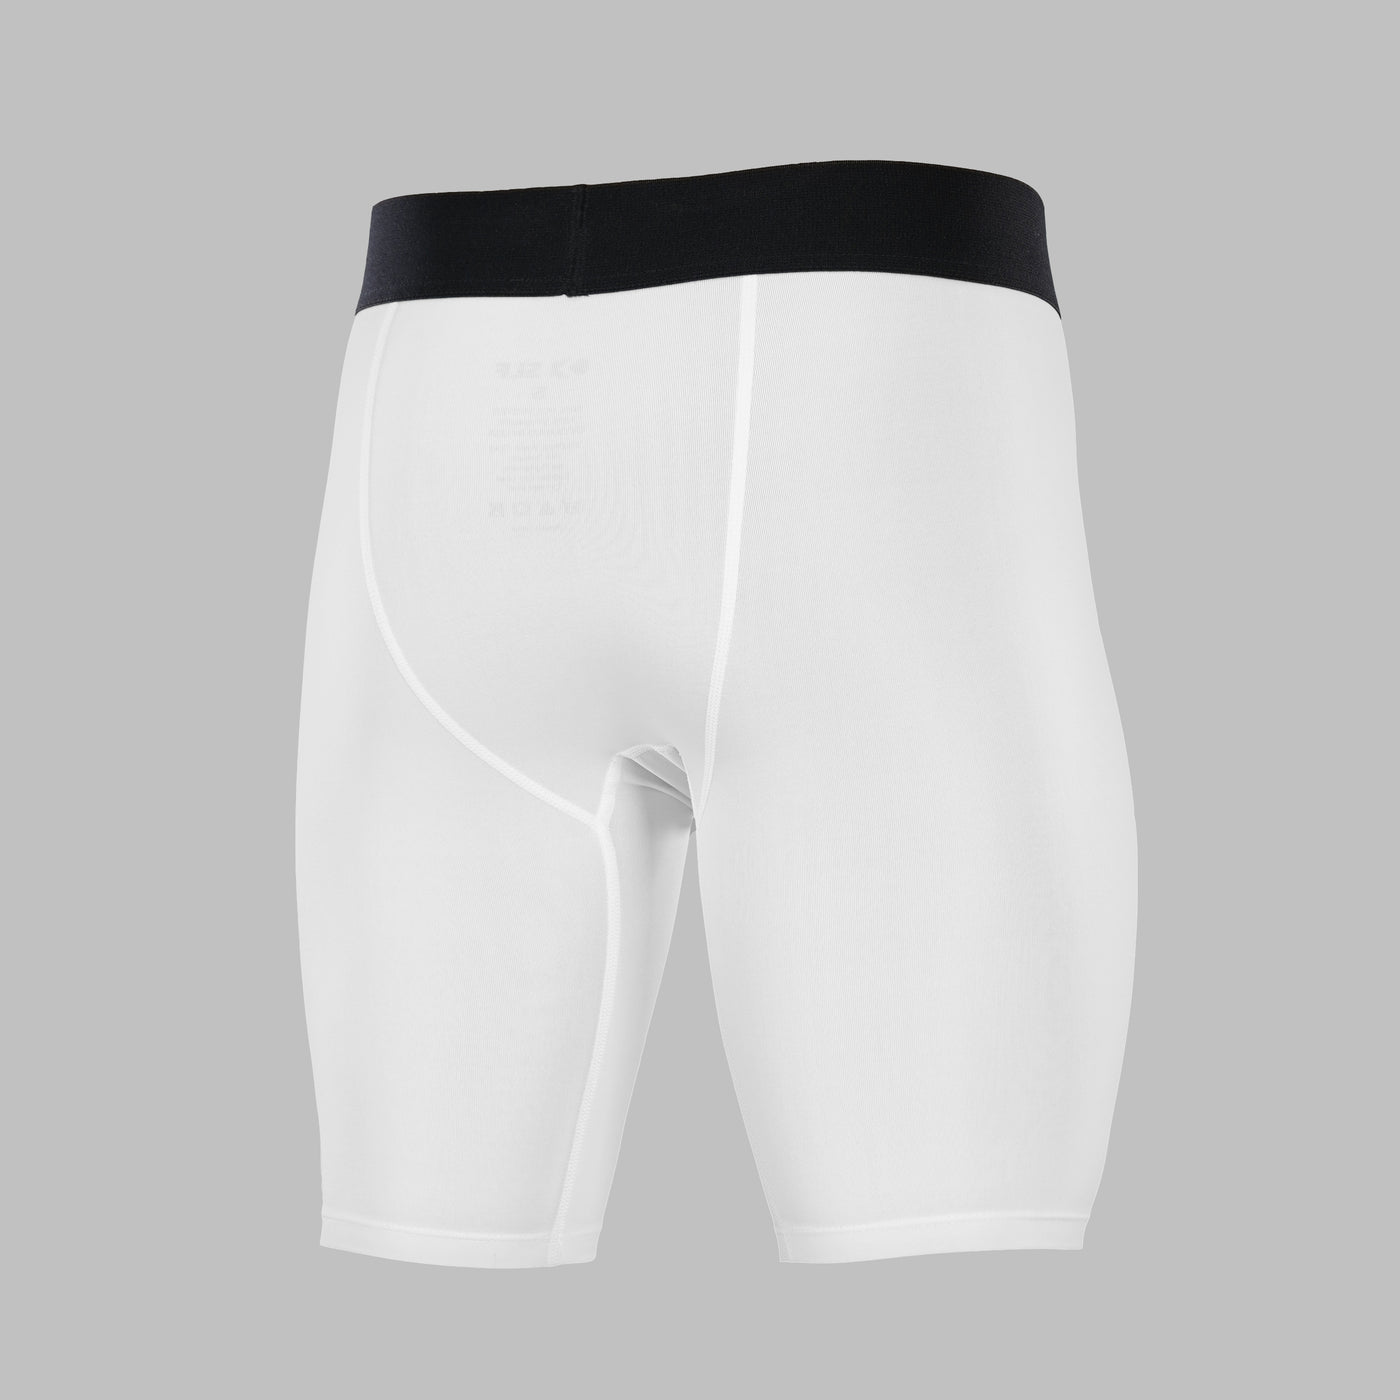 Basic White Compression Shorts